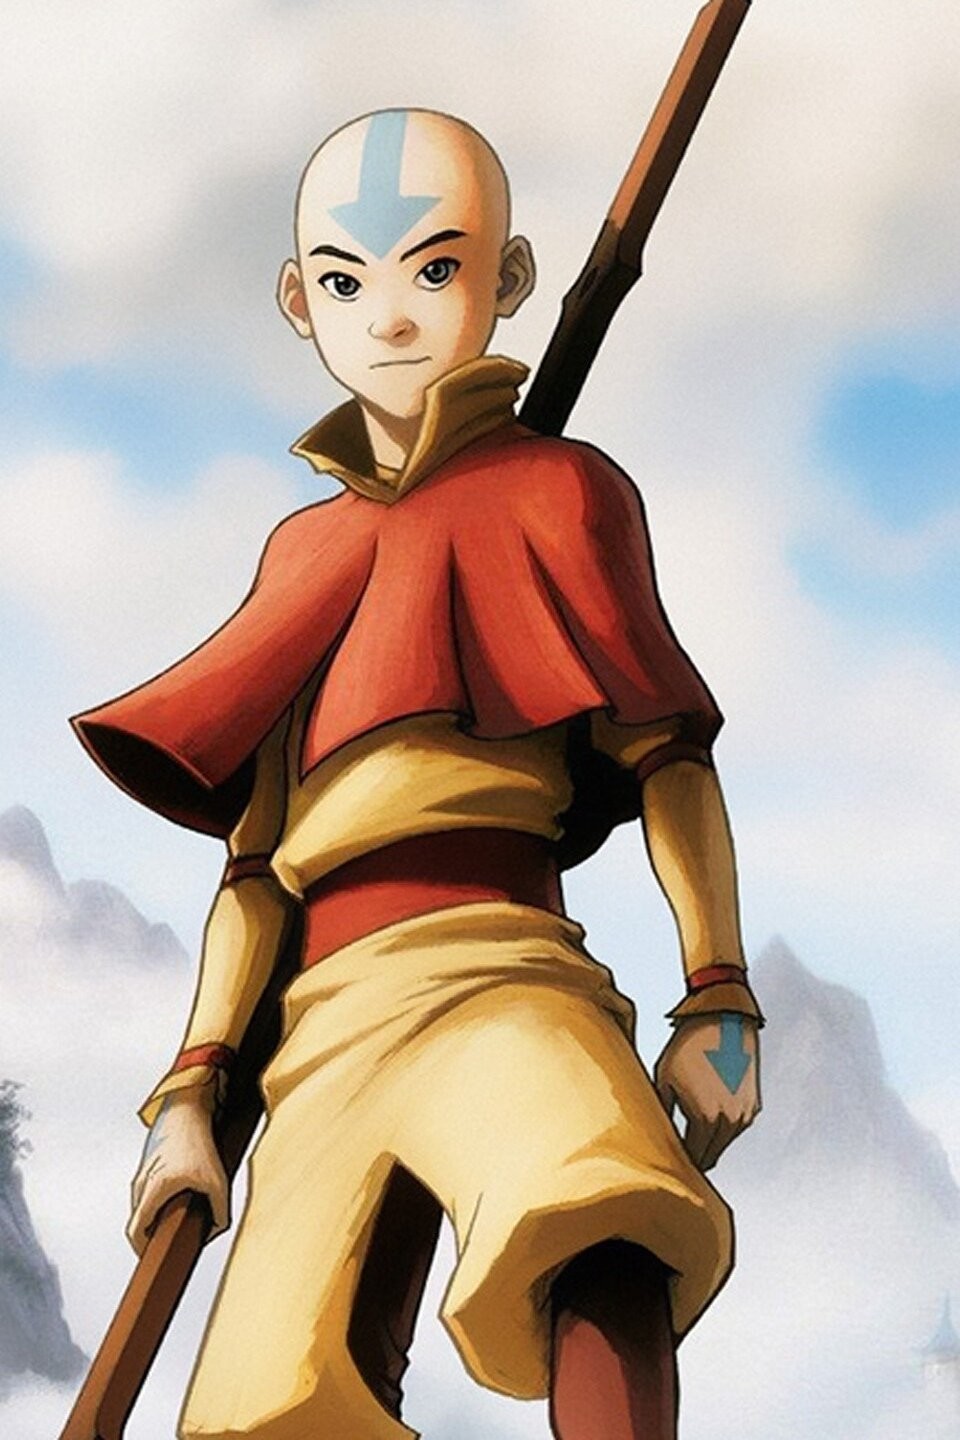 Do people consider Avatar an anime? - Quora